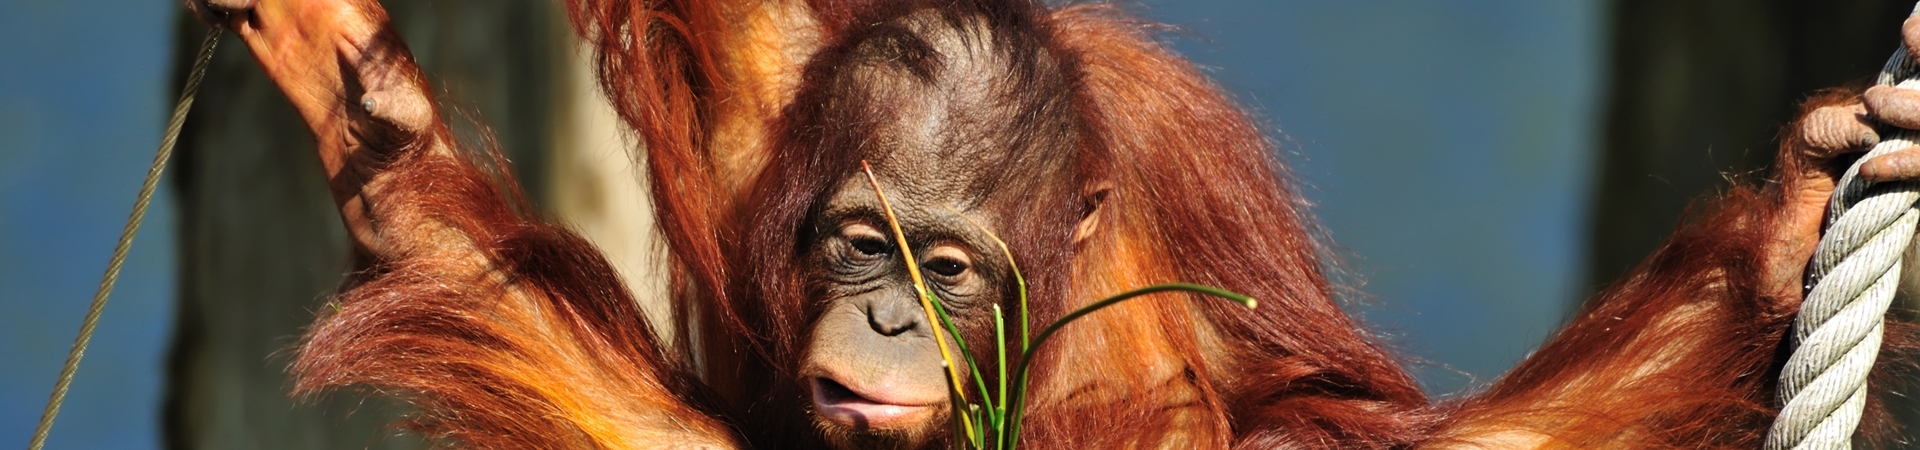 Image of Trekking - Trailing the Sumatran Orangutan